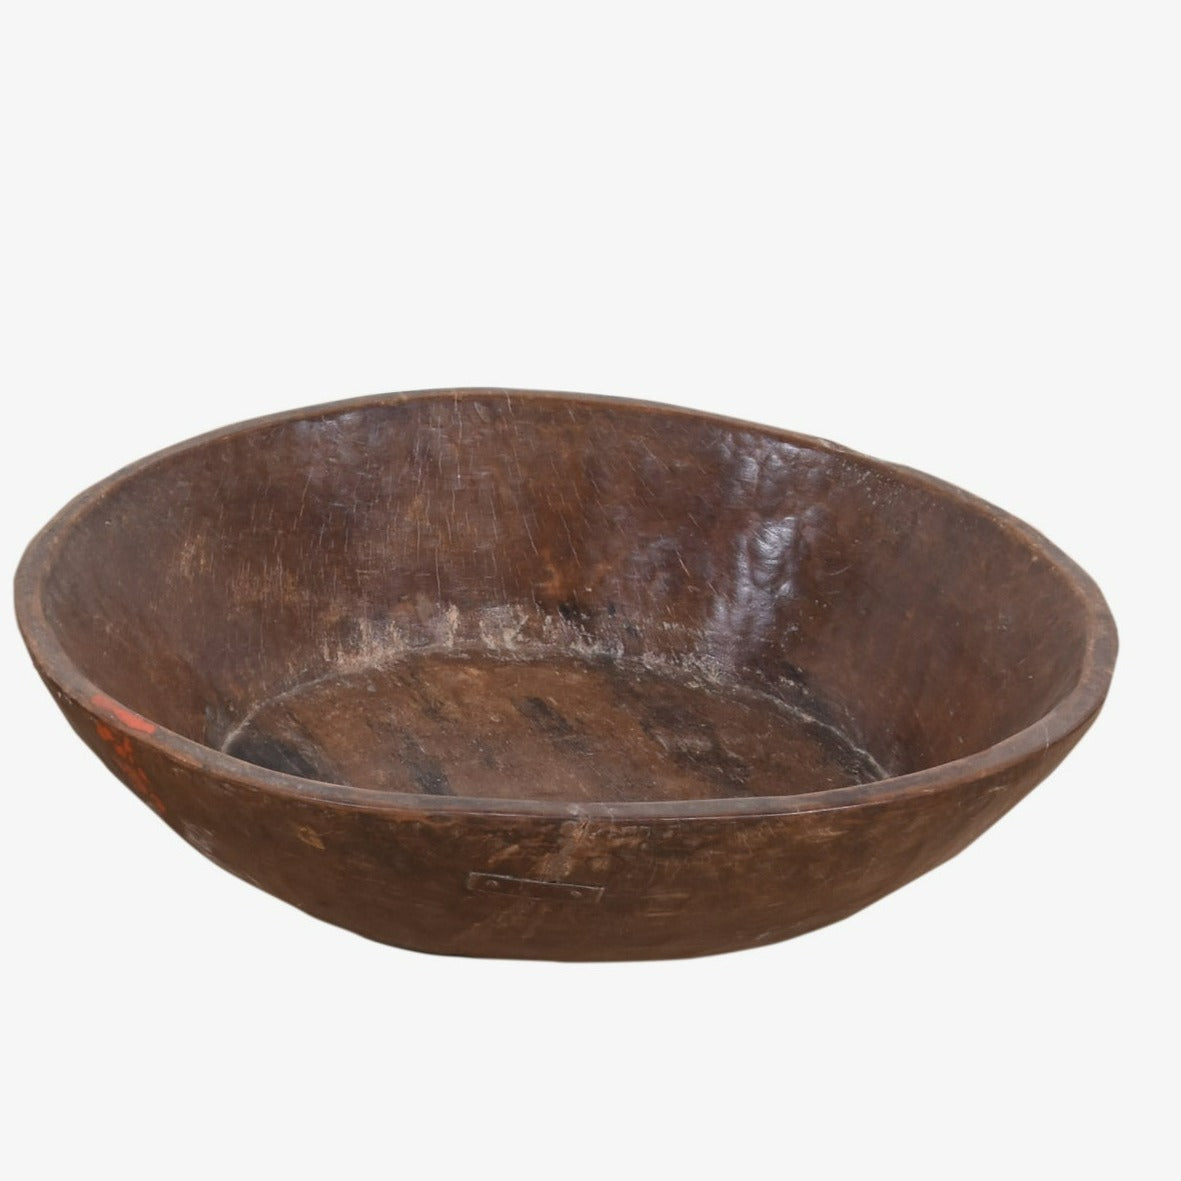 Bowl de madera estilo indígena 60cm núm. 20